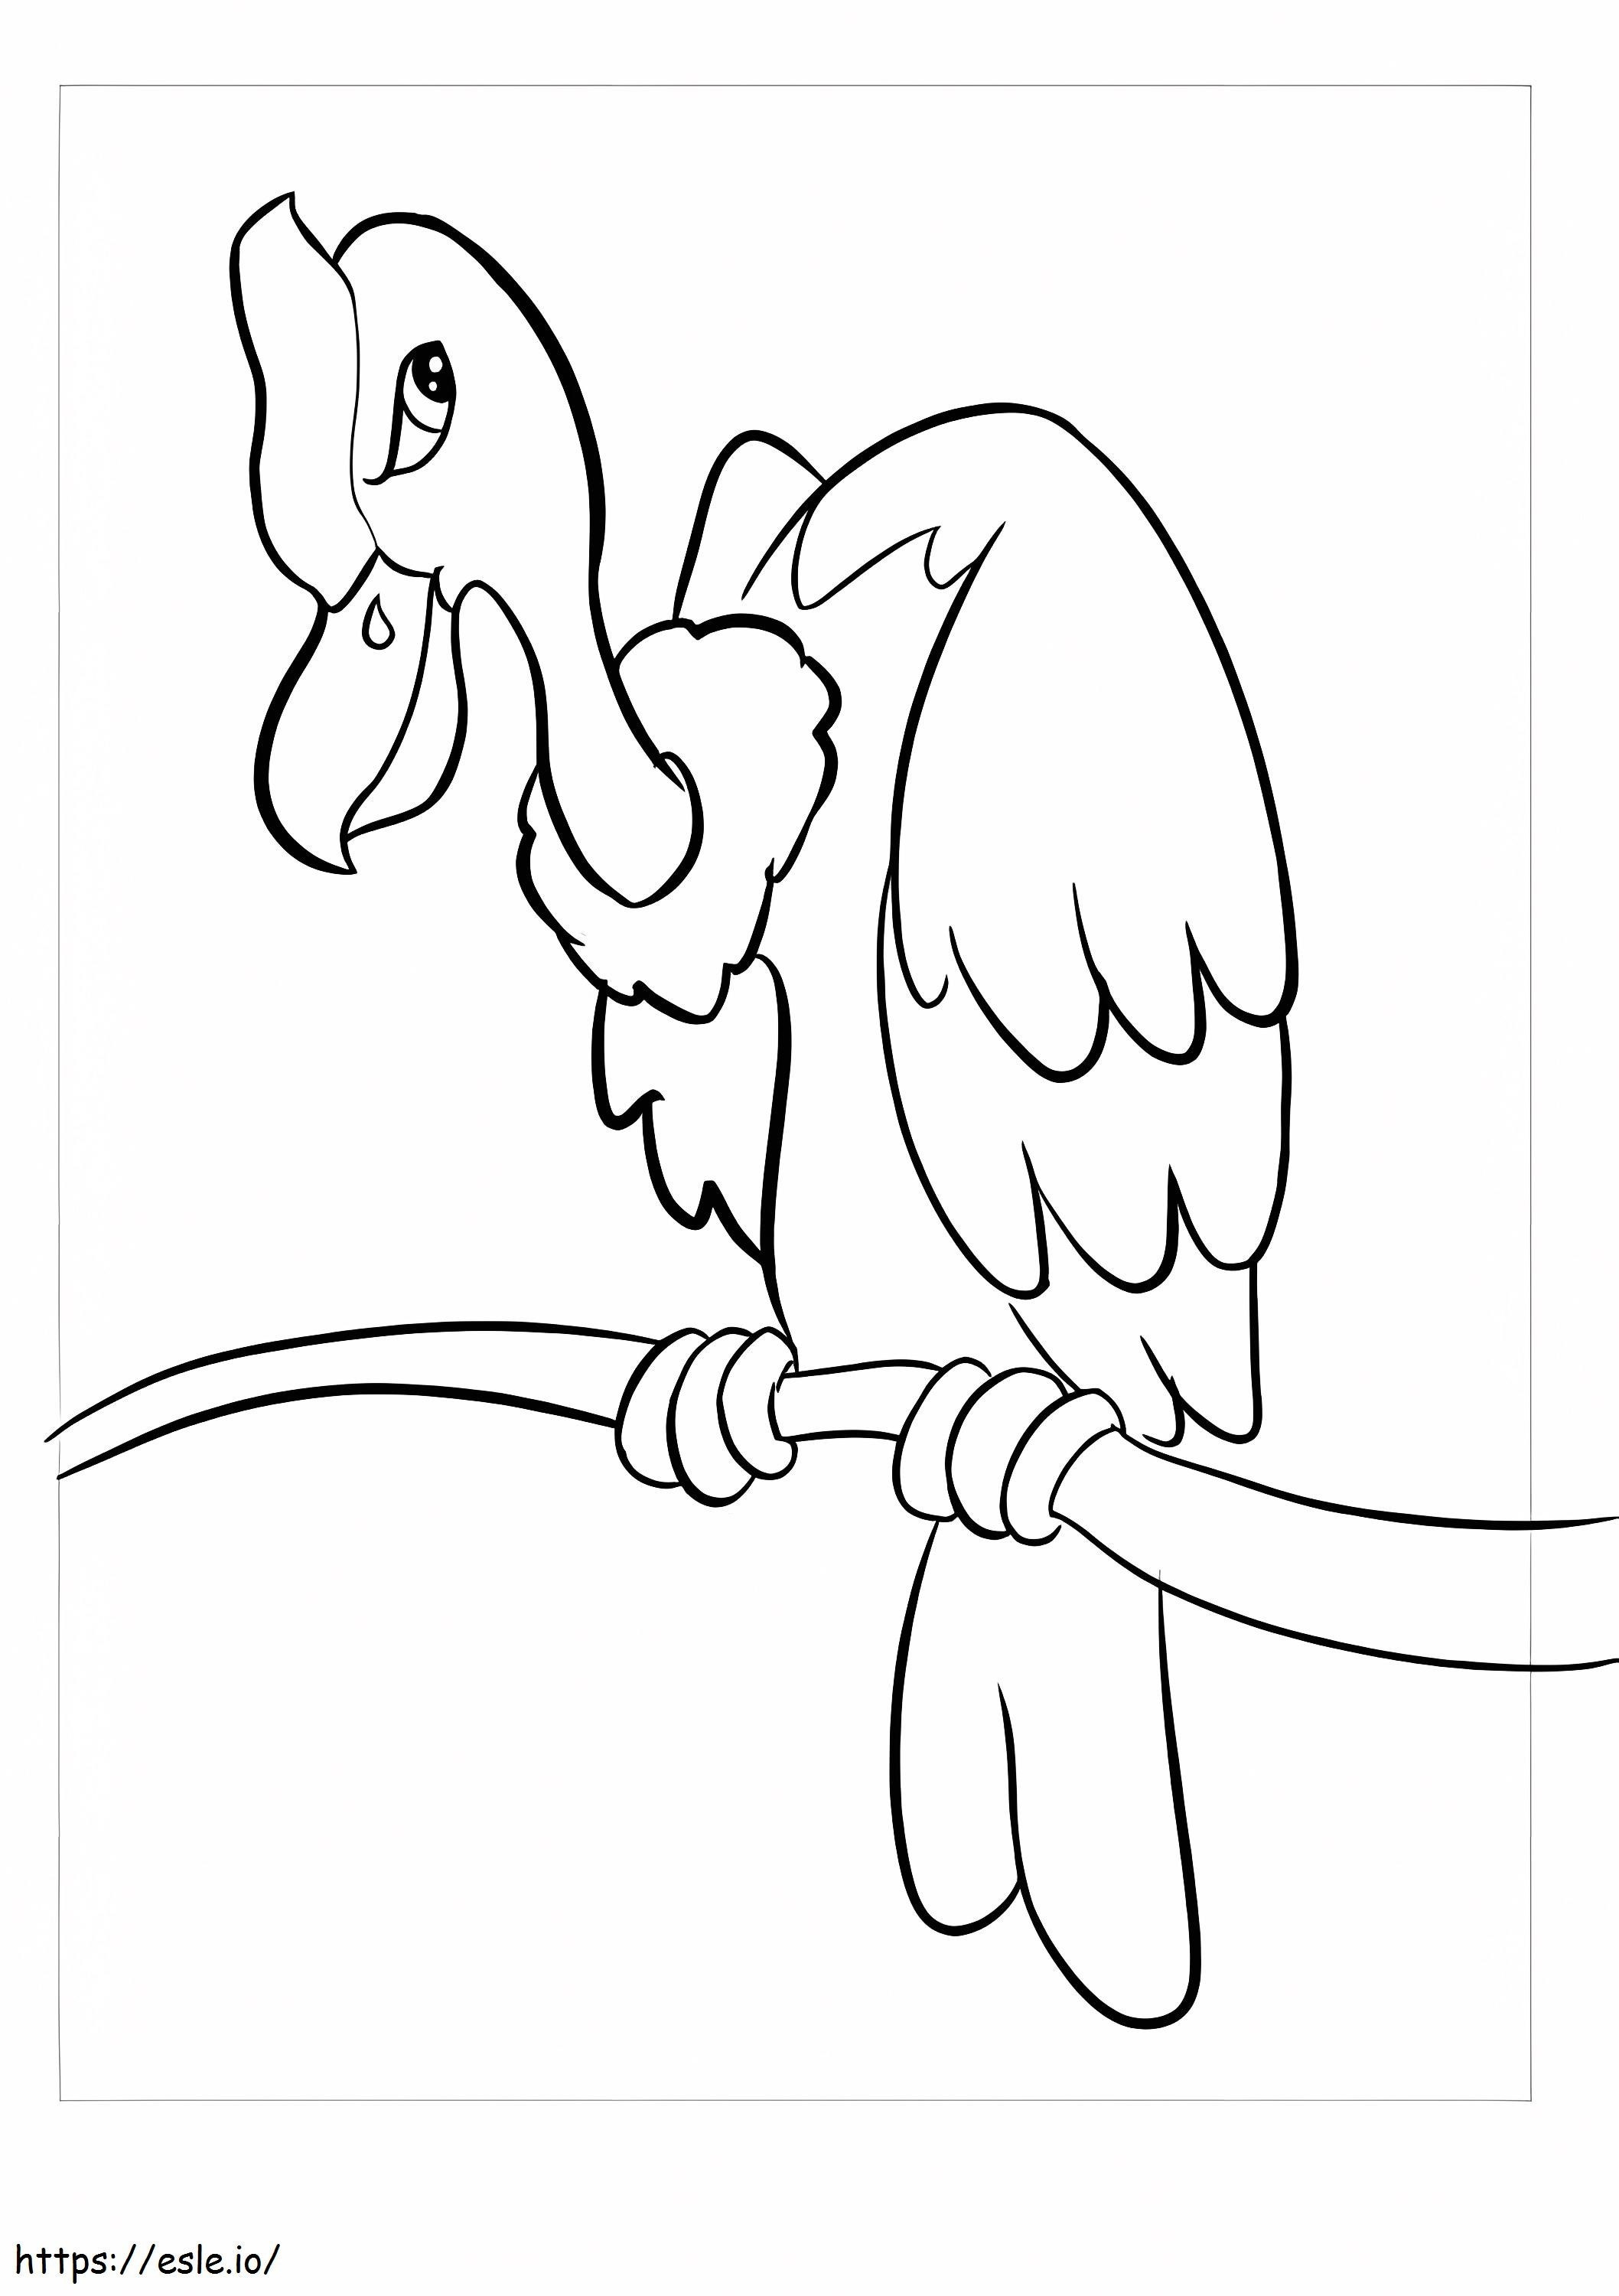 Condor de desenho animado para colorir